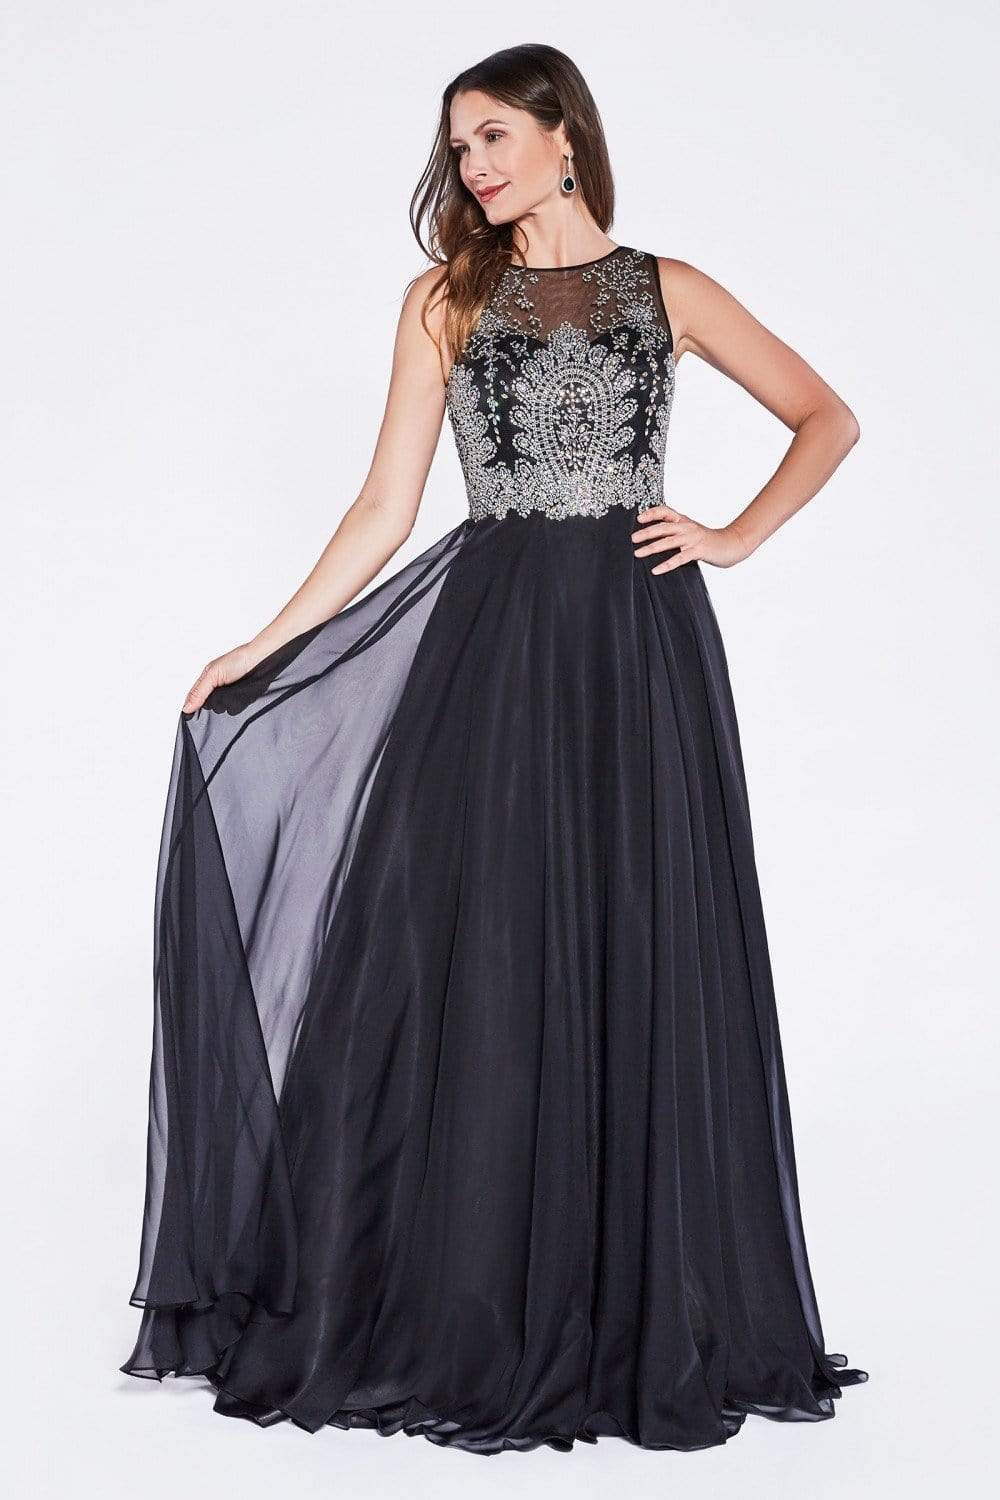 Cinderella Divine - Sleeveless Illusion Metallic Appliqued A-Line Gown
